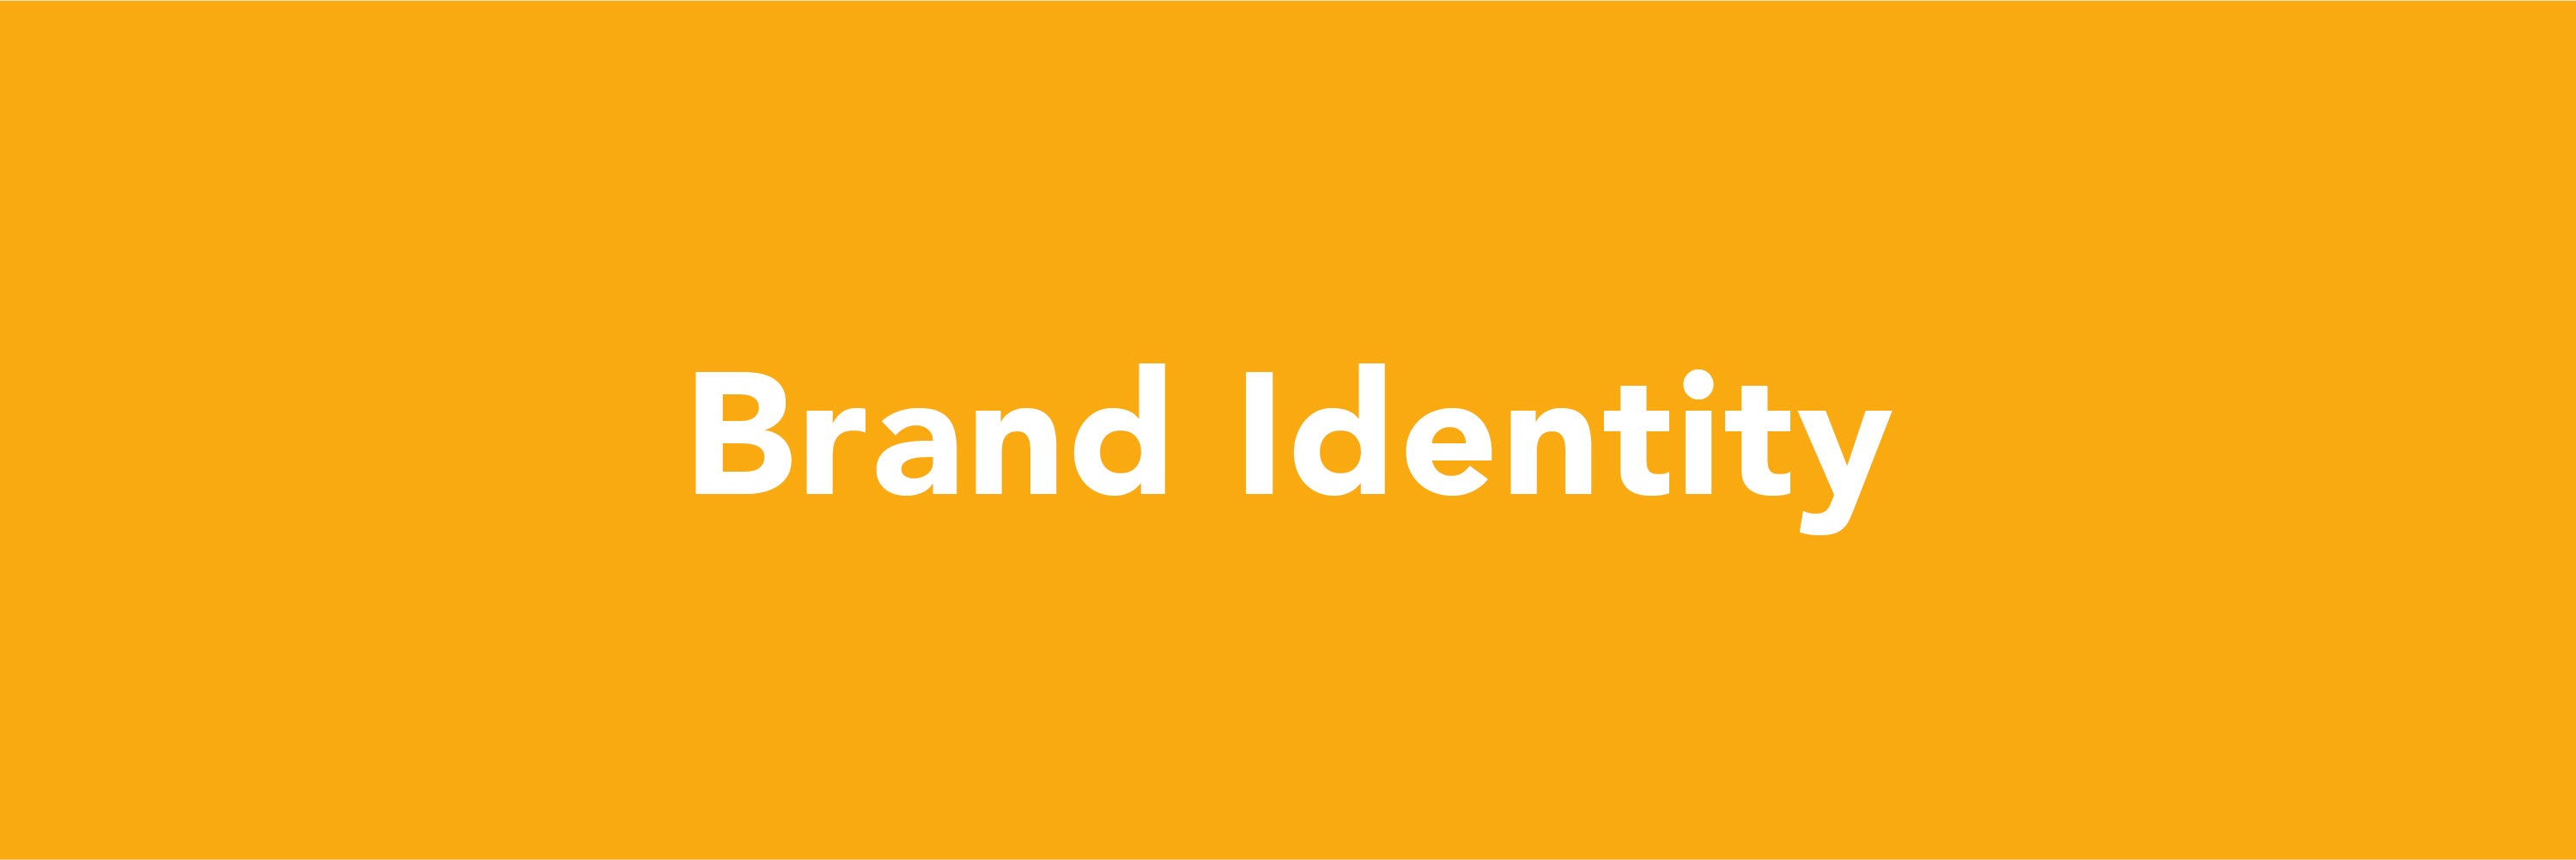 Brand Identity - Simplelifeco UK